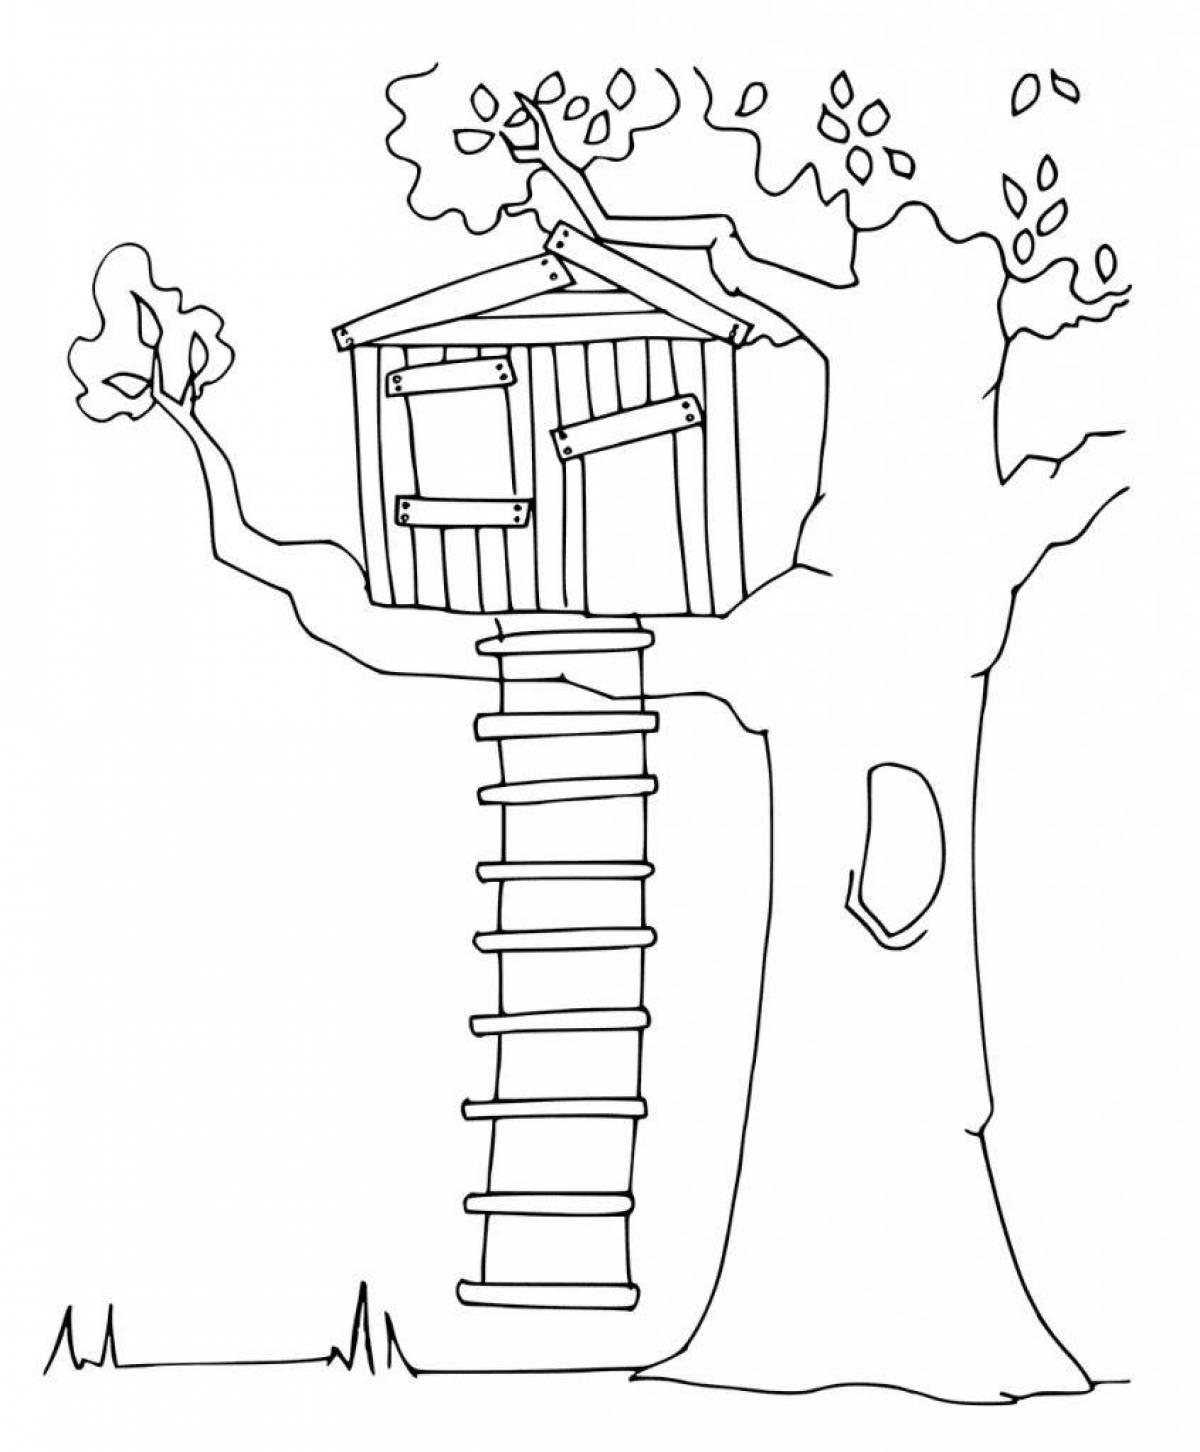 Tree house #5